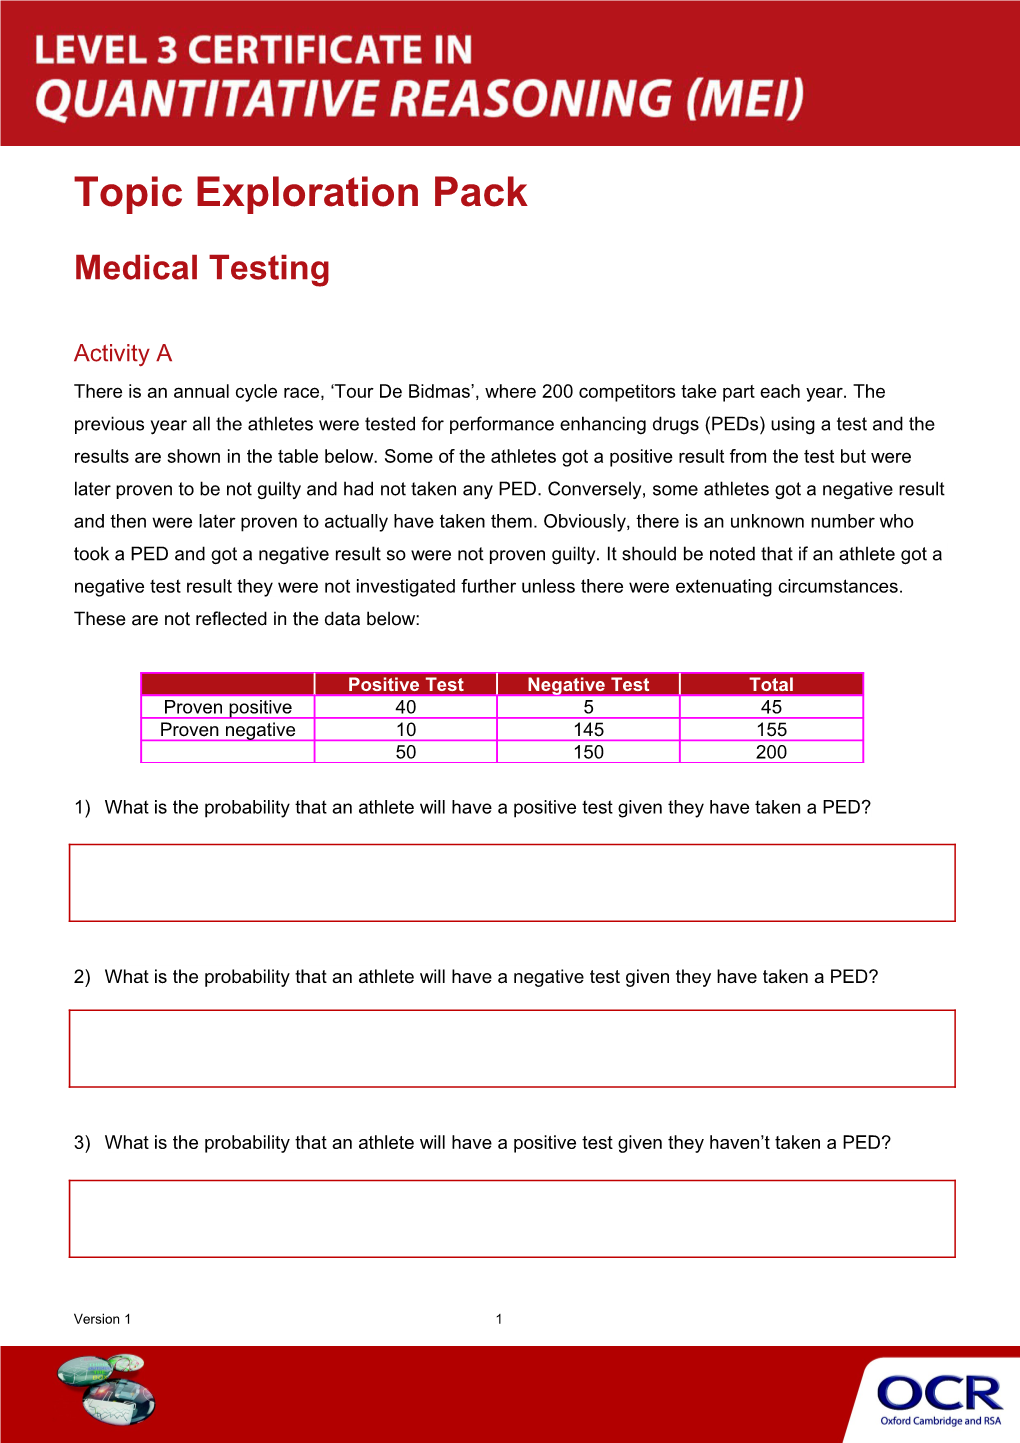 Level 3 Certificate in Quantitative Reasoning (MEI) Topic Exploration Pack (Medical Testing)